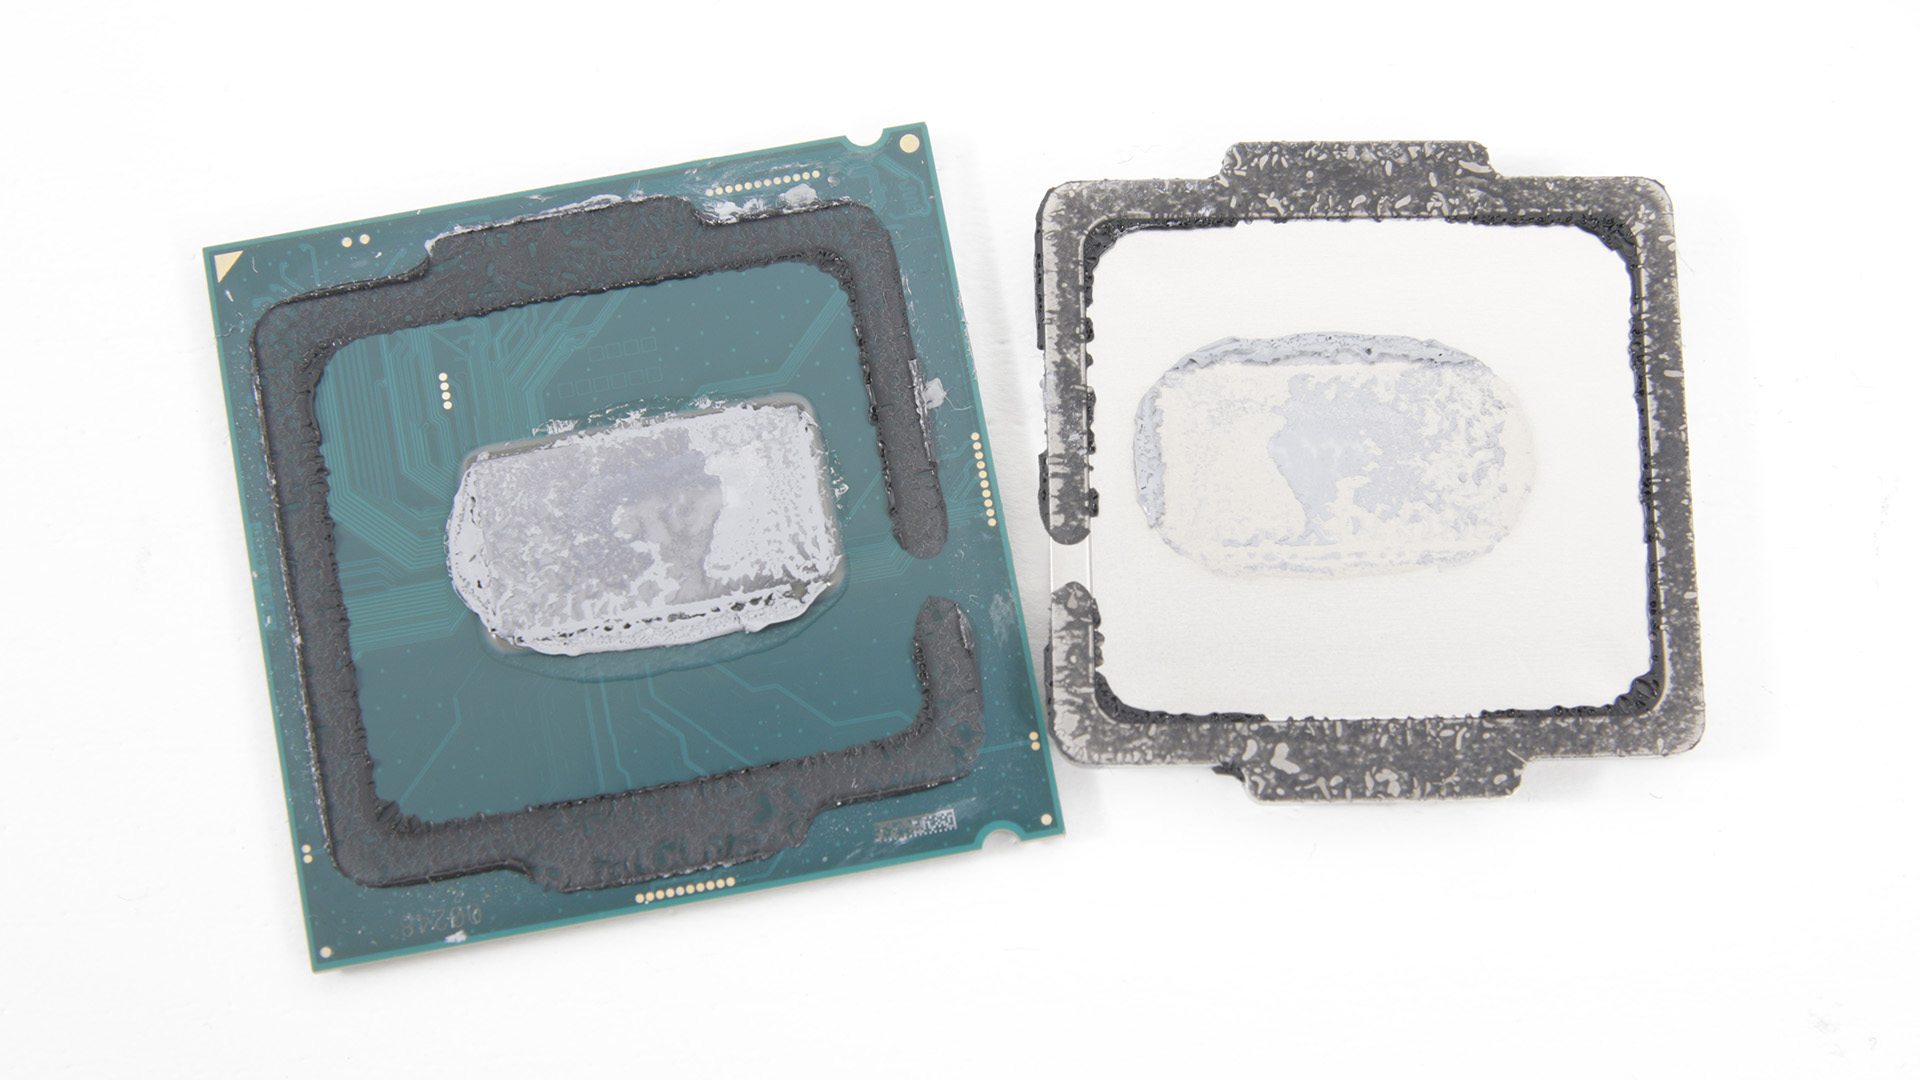 Delidded Intel CPU